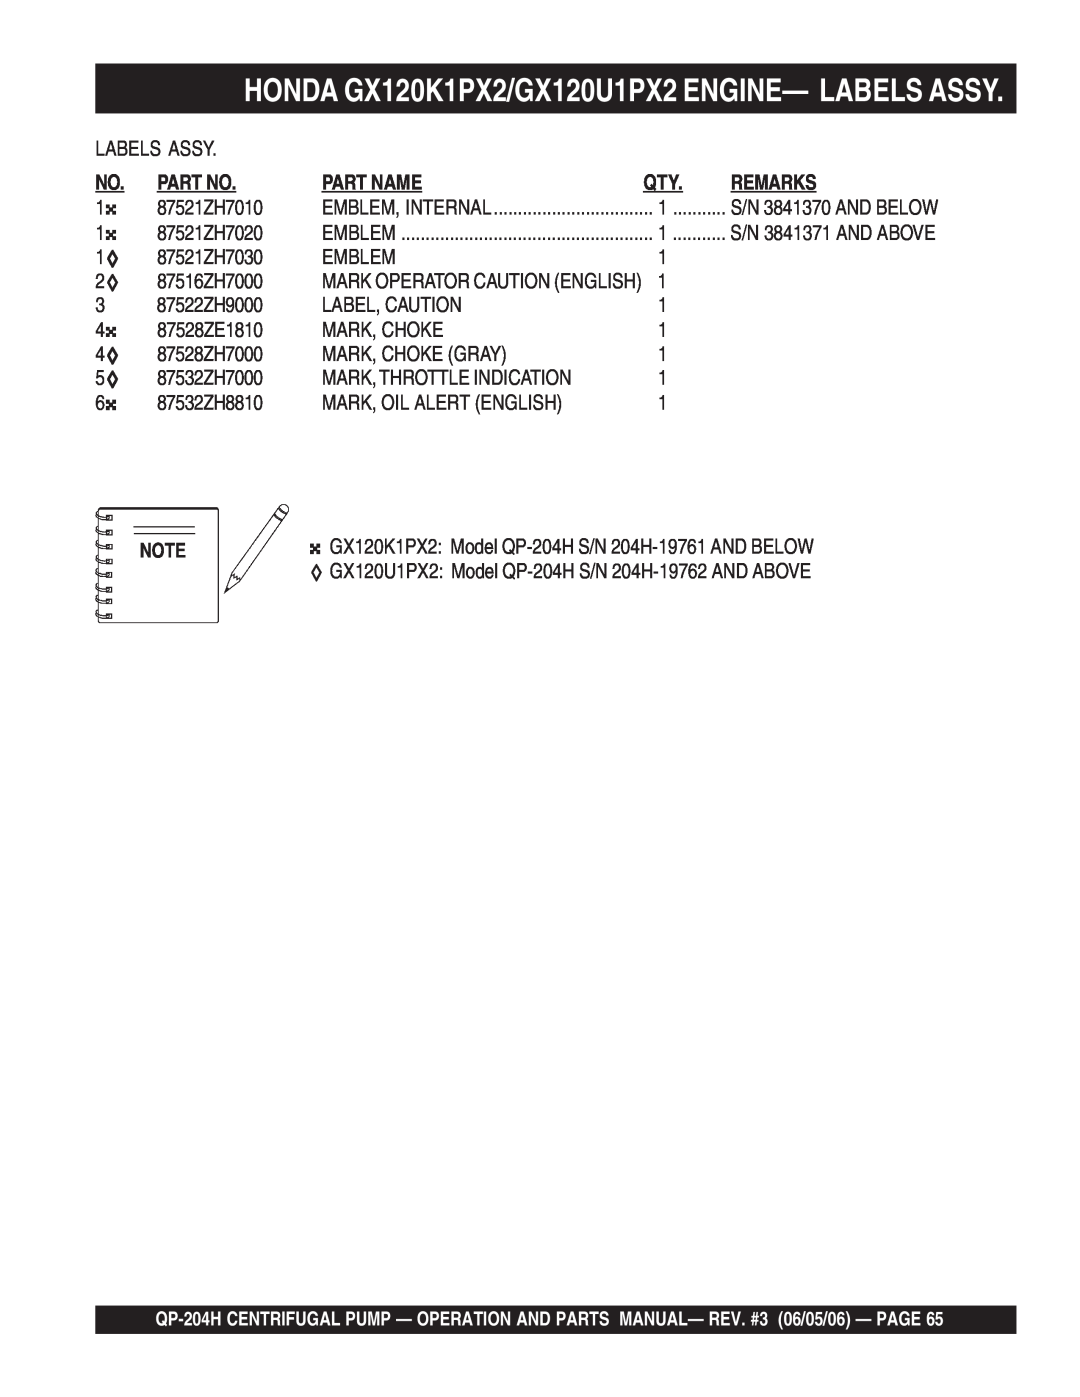 Multiquip QP-204H manual HONDA GX120K1PX2/GX120U1PX2 ENGINE- LABELS ASSY, Labels Assy, Part Name, Remarks 